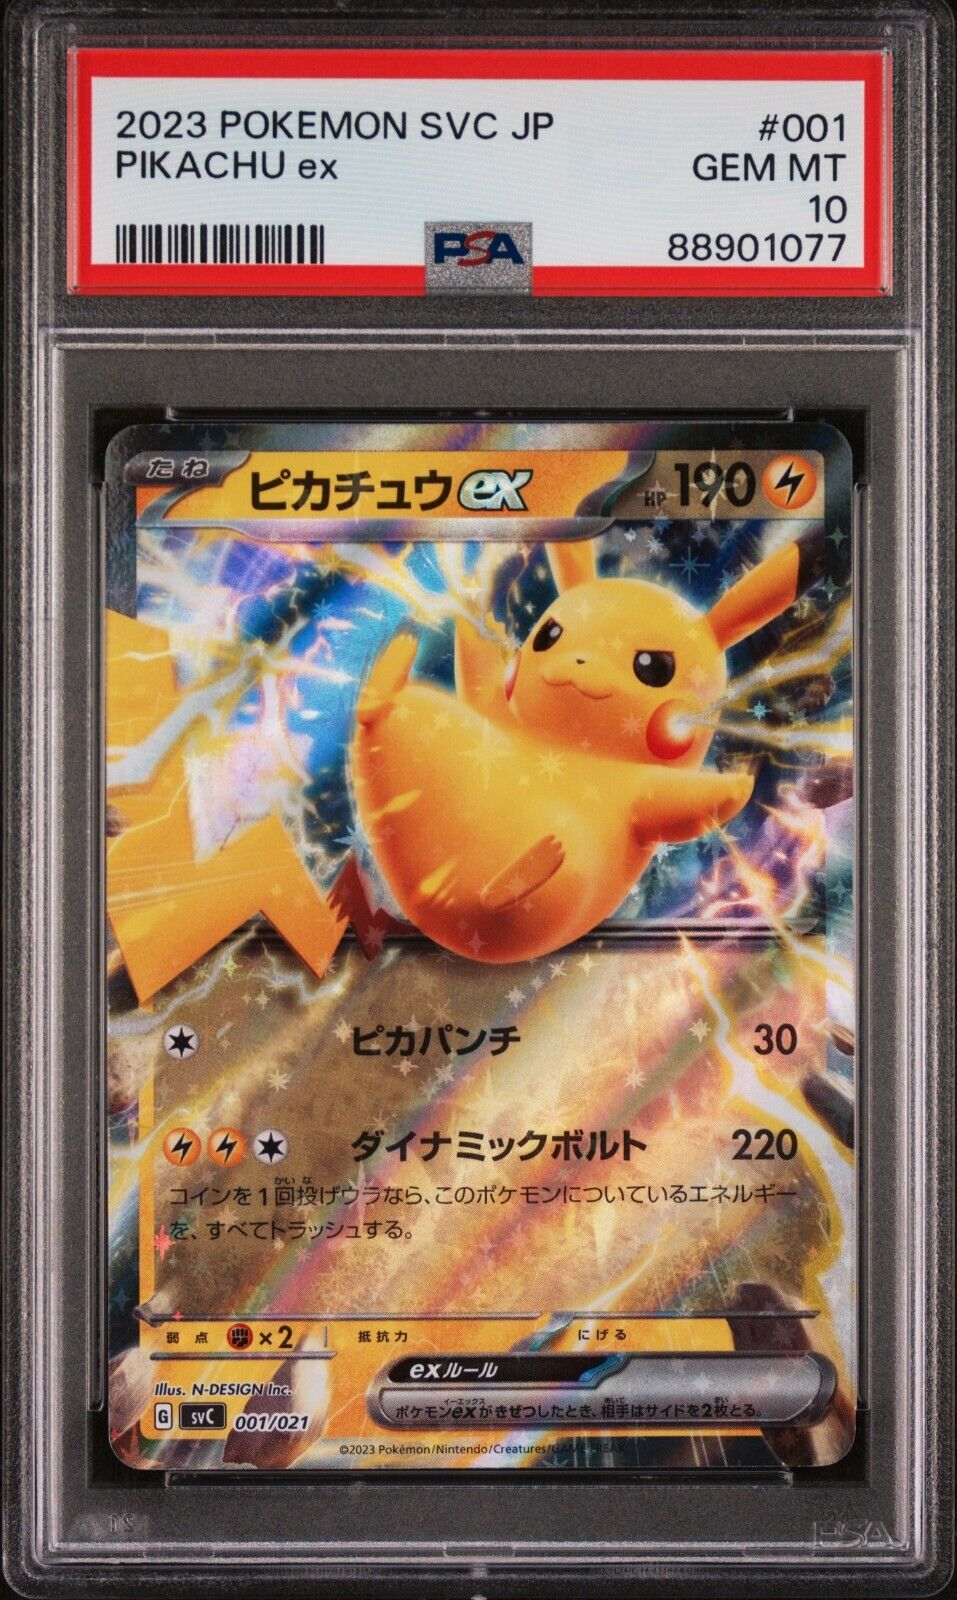 PSA 10 Pikachu EX 2023 Pokemon Card 001/021 SVC